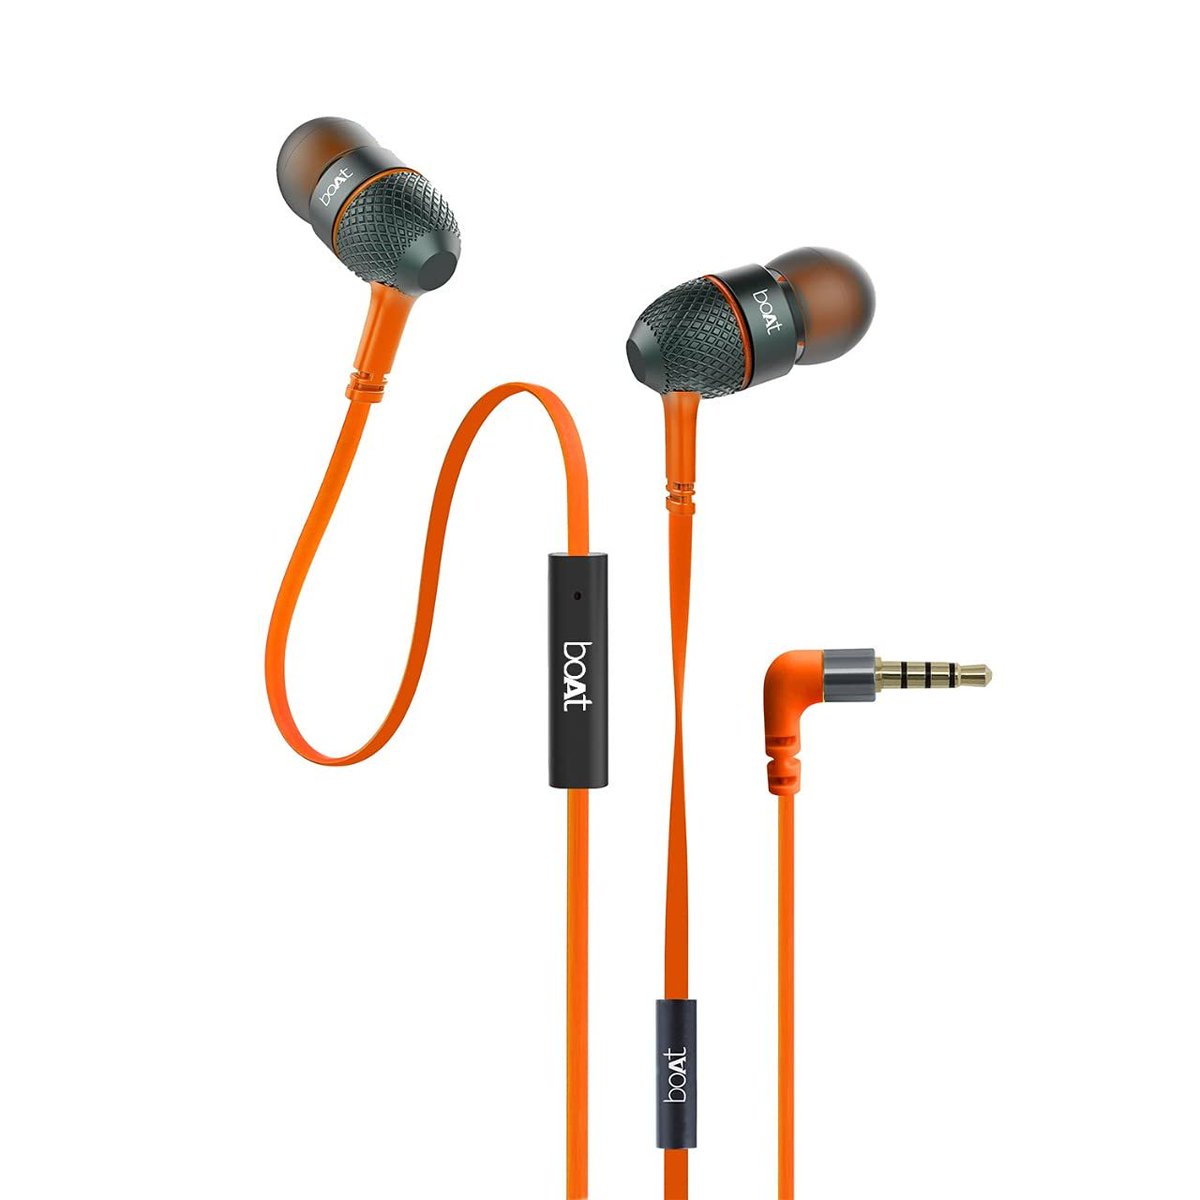 boAt Bassheads 220 in Ear Wired Earphones(Fiery Orange Indi)

📌 Discount: 60%

➡️ amzn.to/3I2gzr6

#ad #AmazonIndia #bestdeals #dealsoftheday